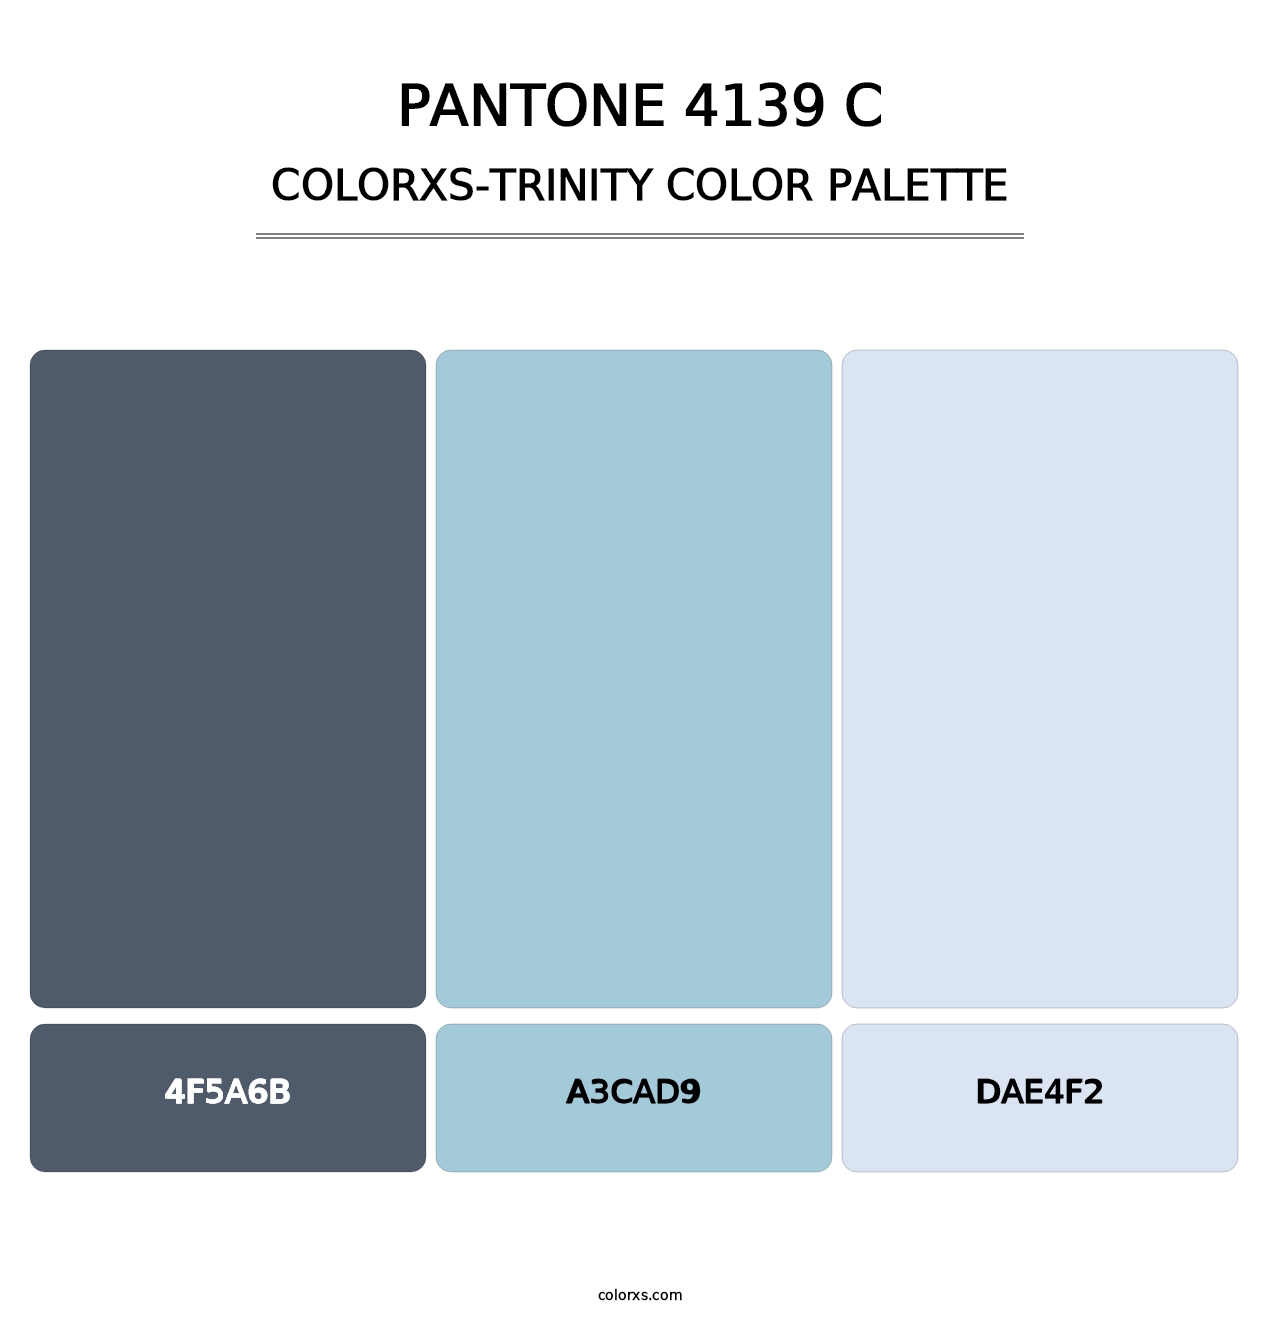 PANTONE 4139 C - Colorxs Trinity Palette